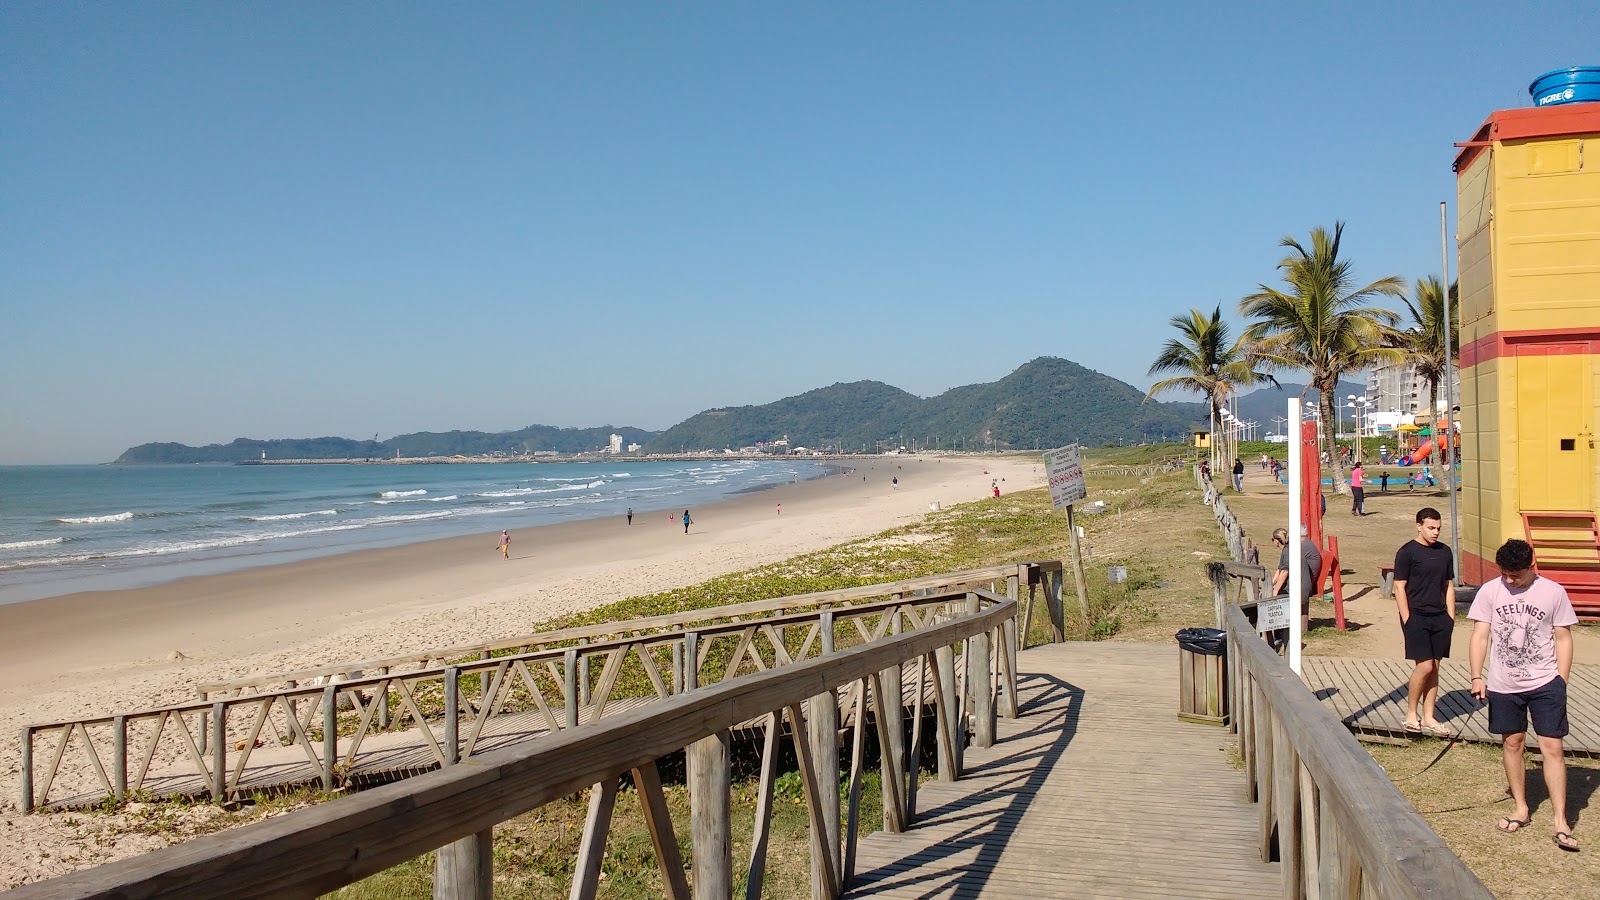 Foto av Praia de Navegantes med hög nivå av renlighet